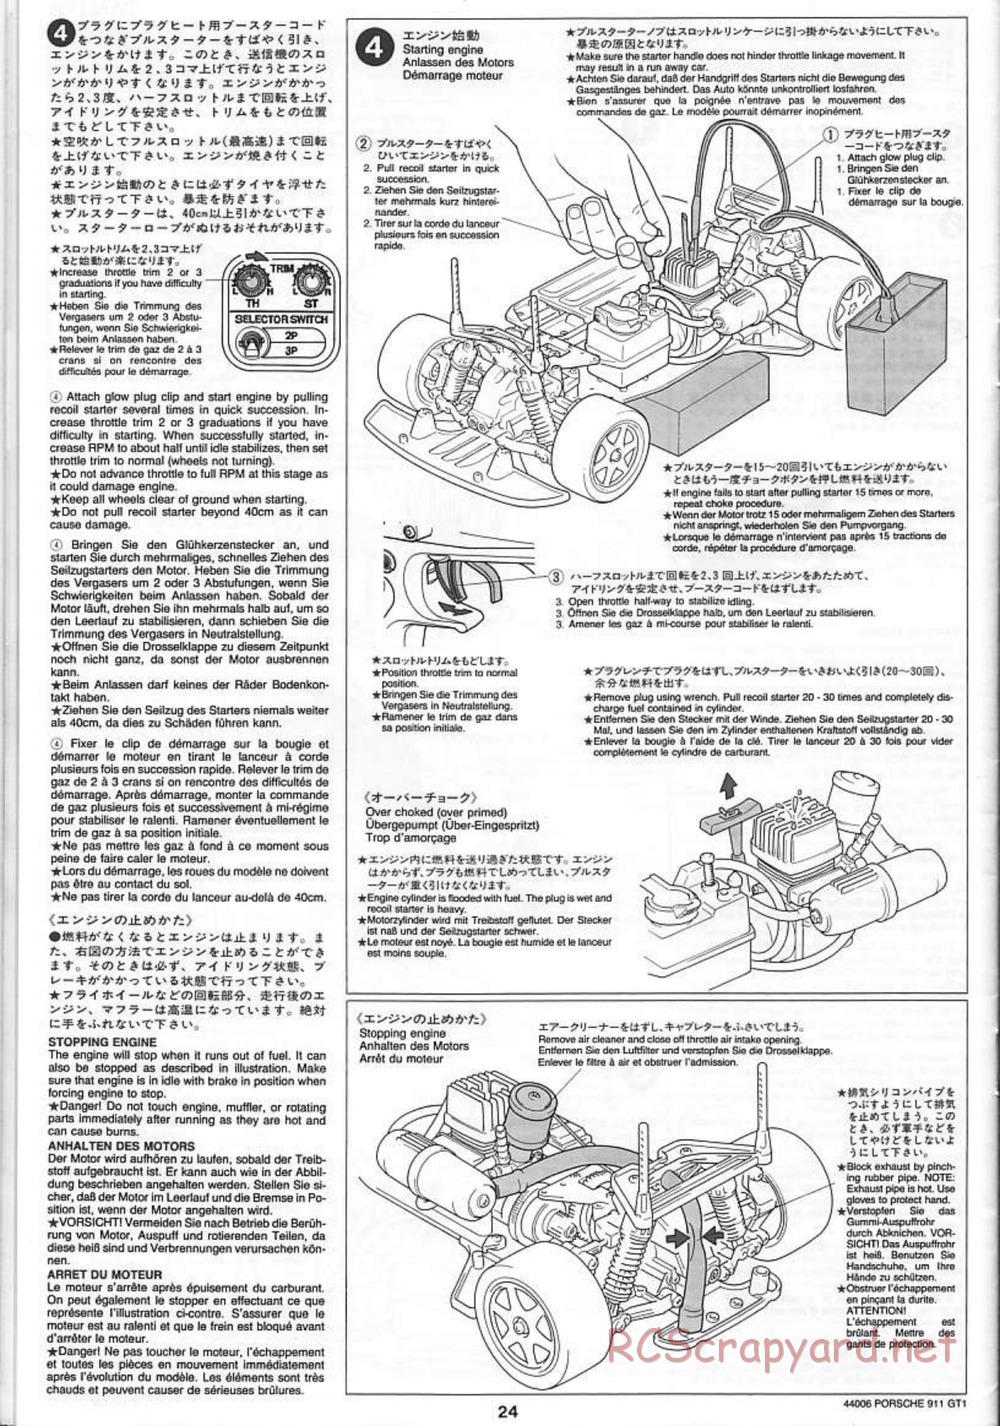 Tamiya - Porsche 911 GT1 - TGX Mk.1 Chassis - Manual - Page 24